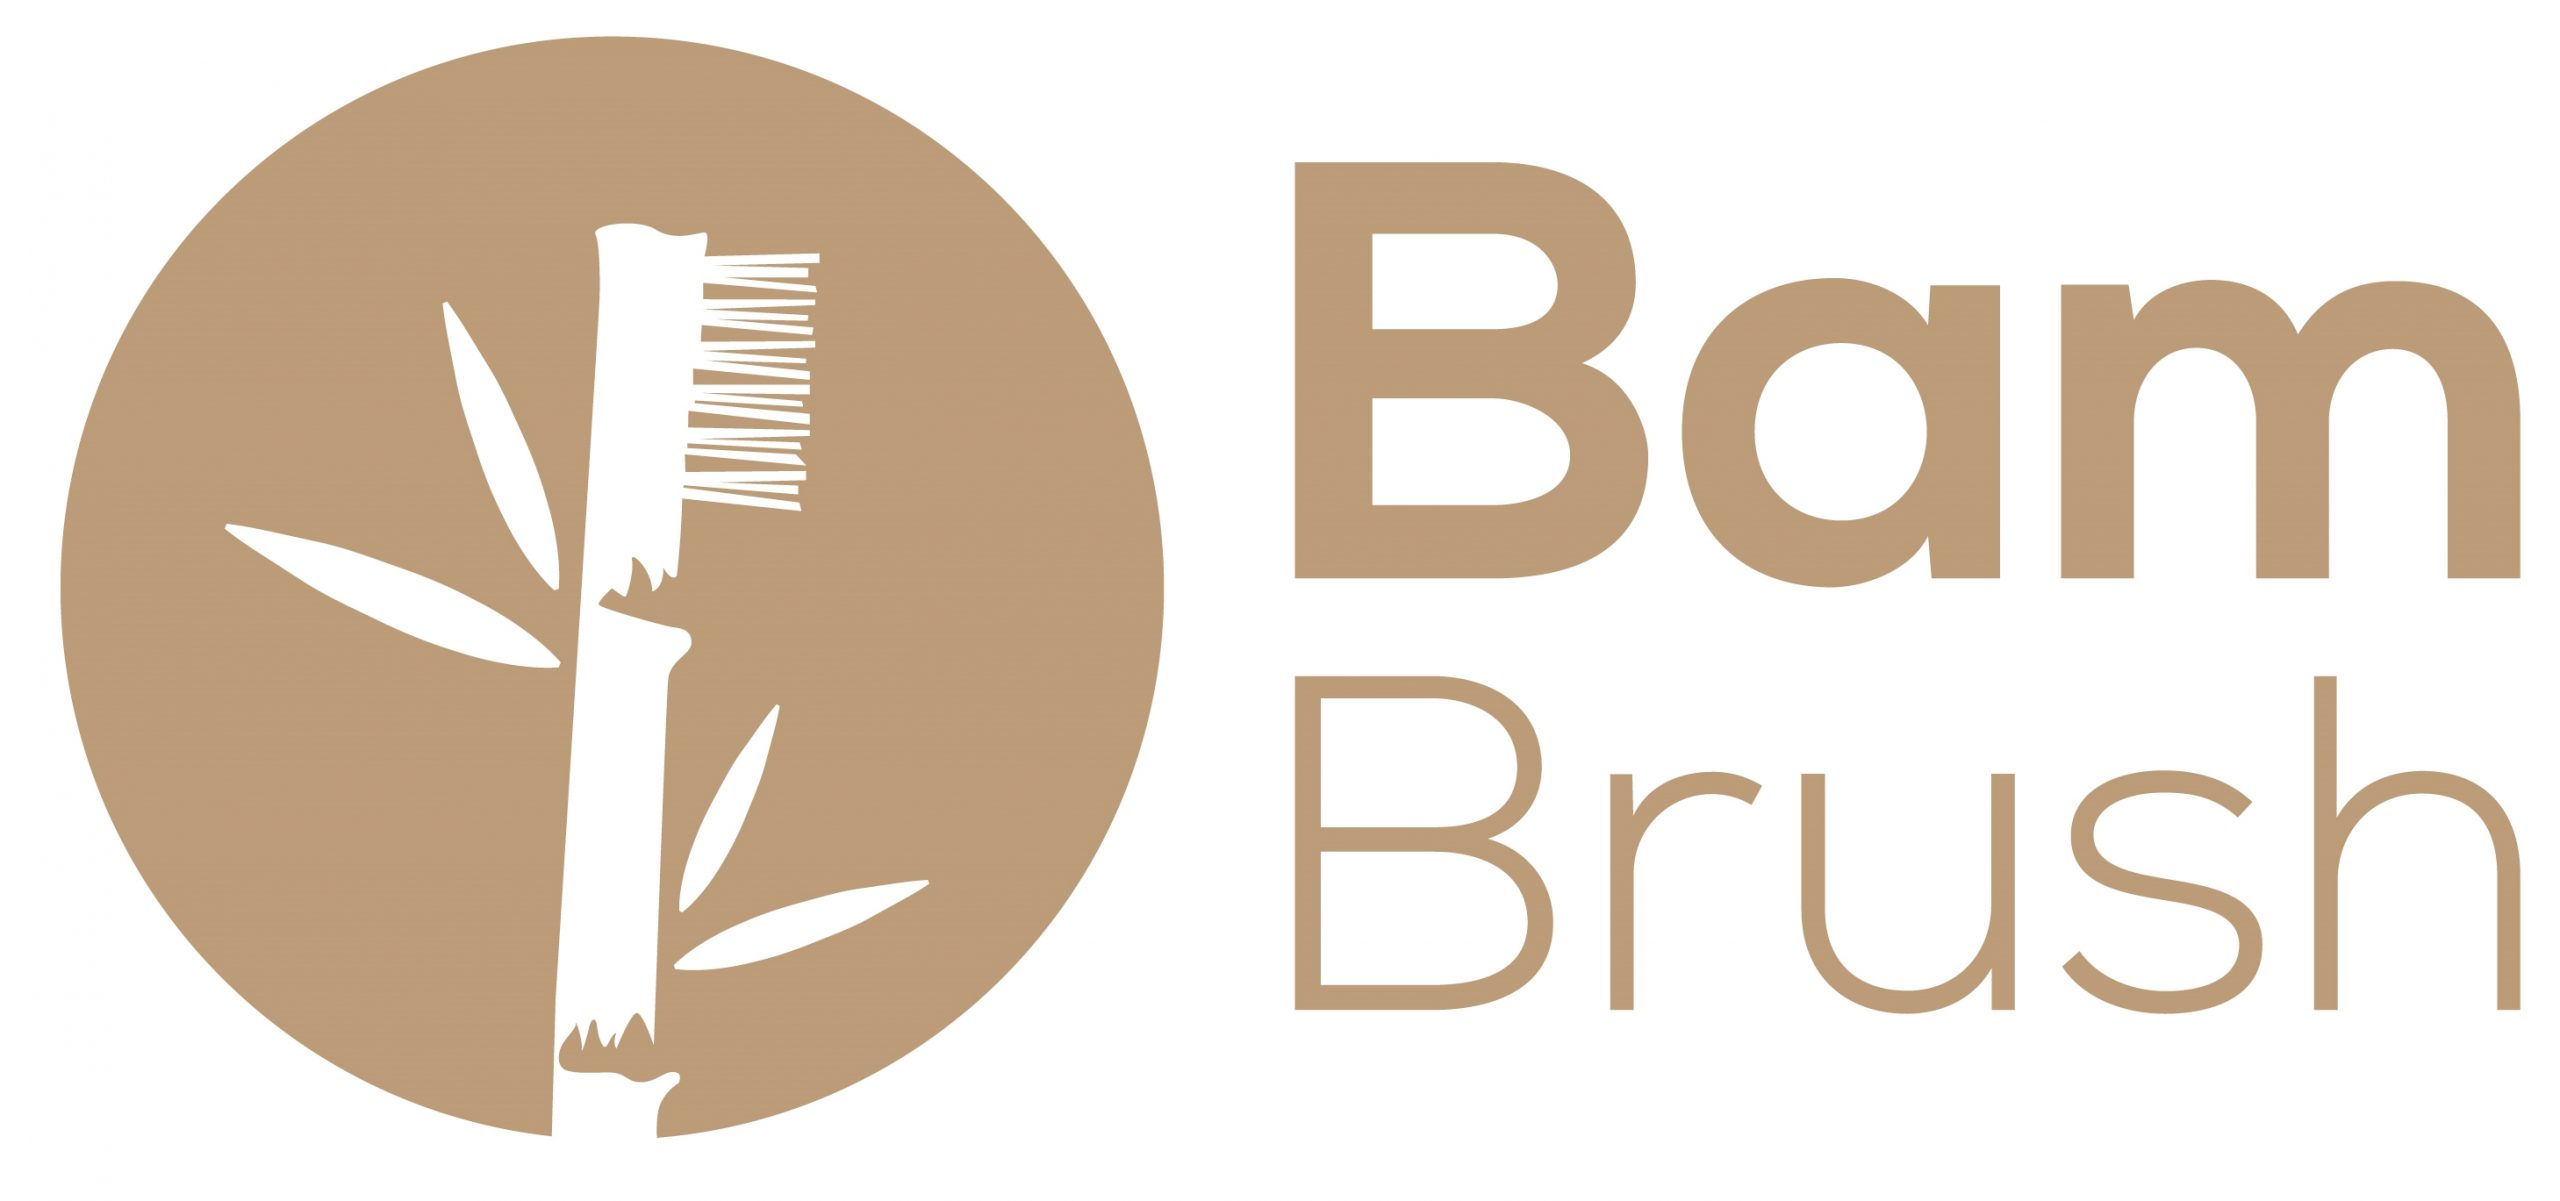 Bambrush.nl | Electrische tandenborstels